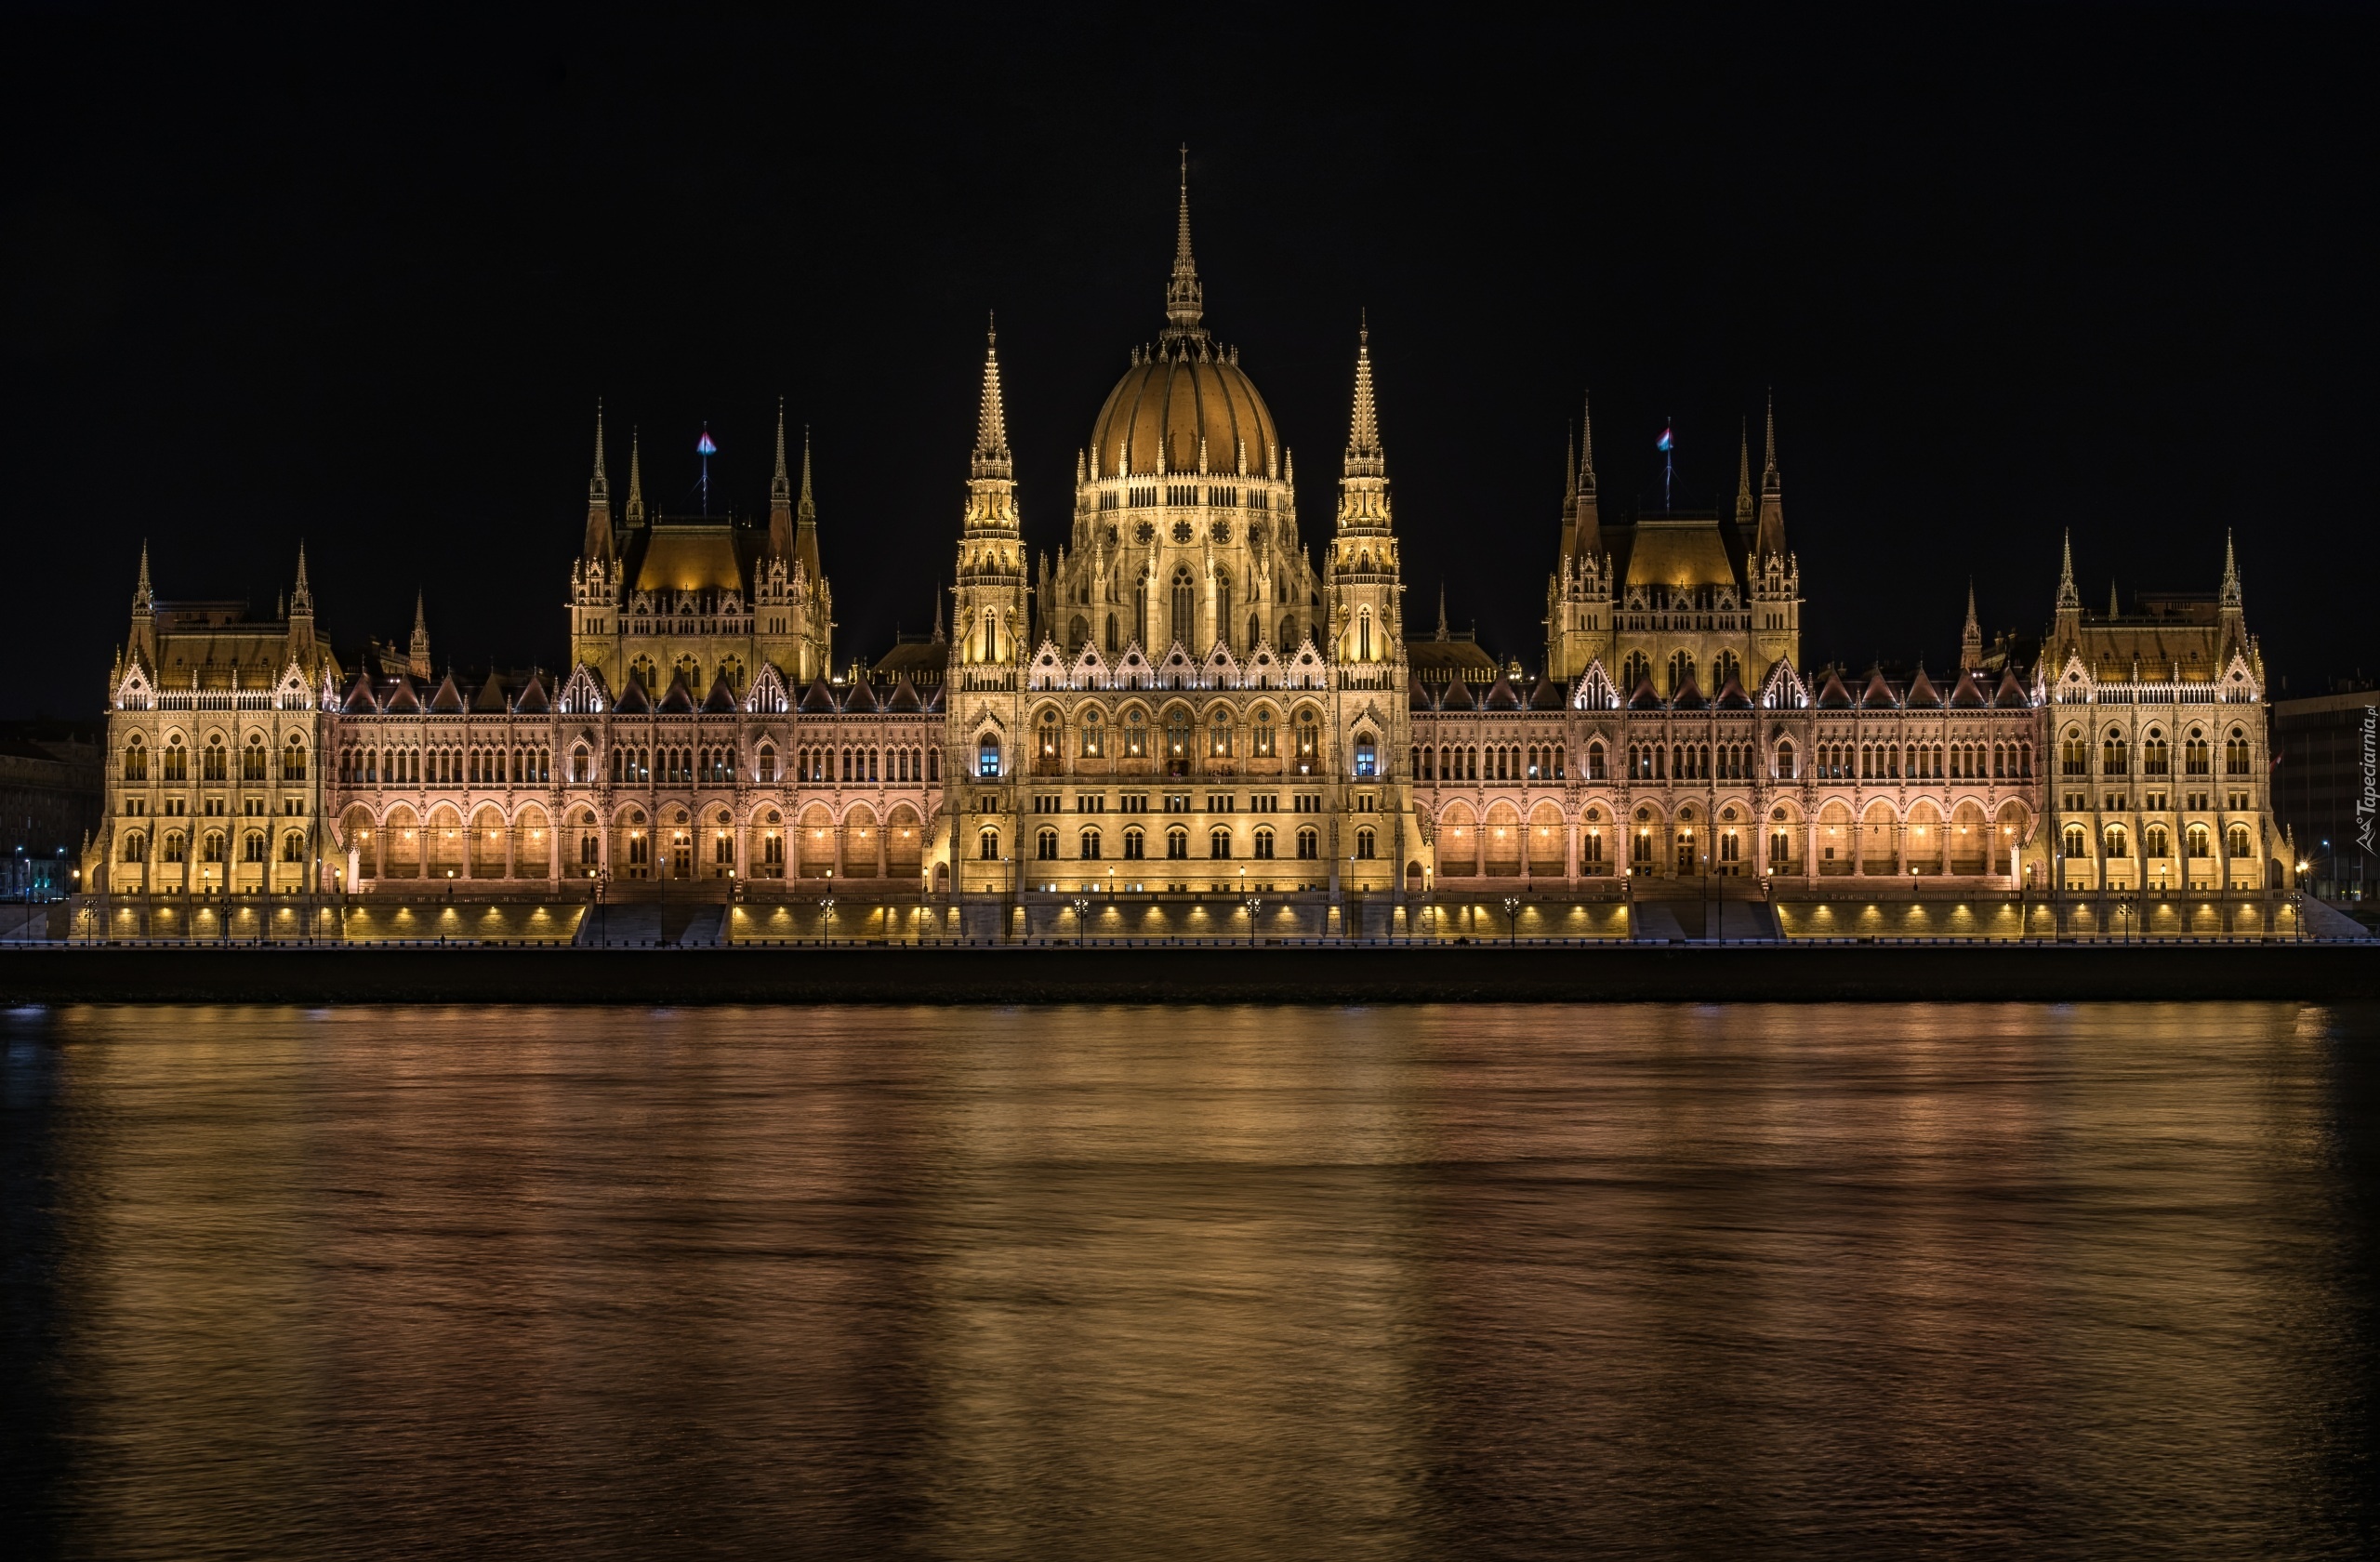 Węgry, Budapeszt, Parlament, Noc